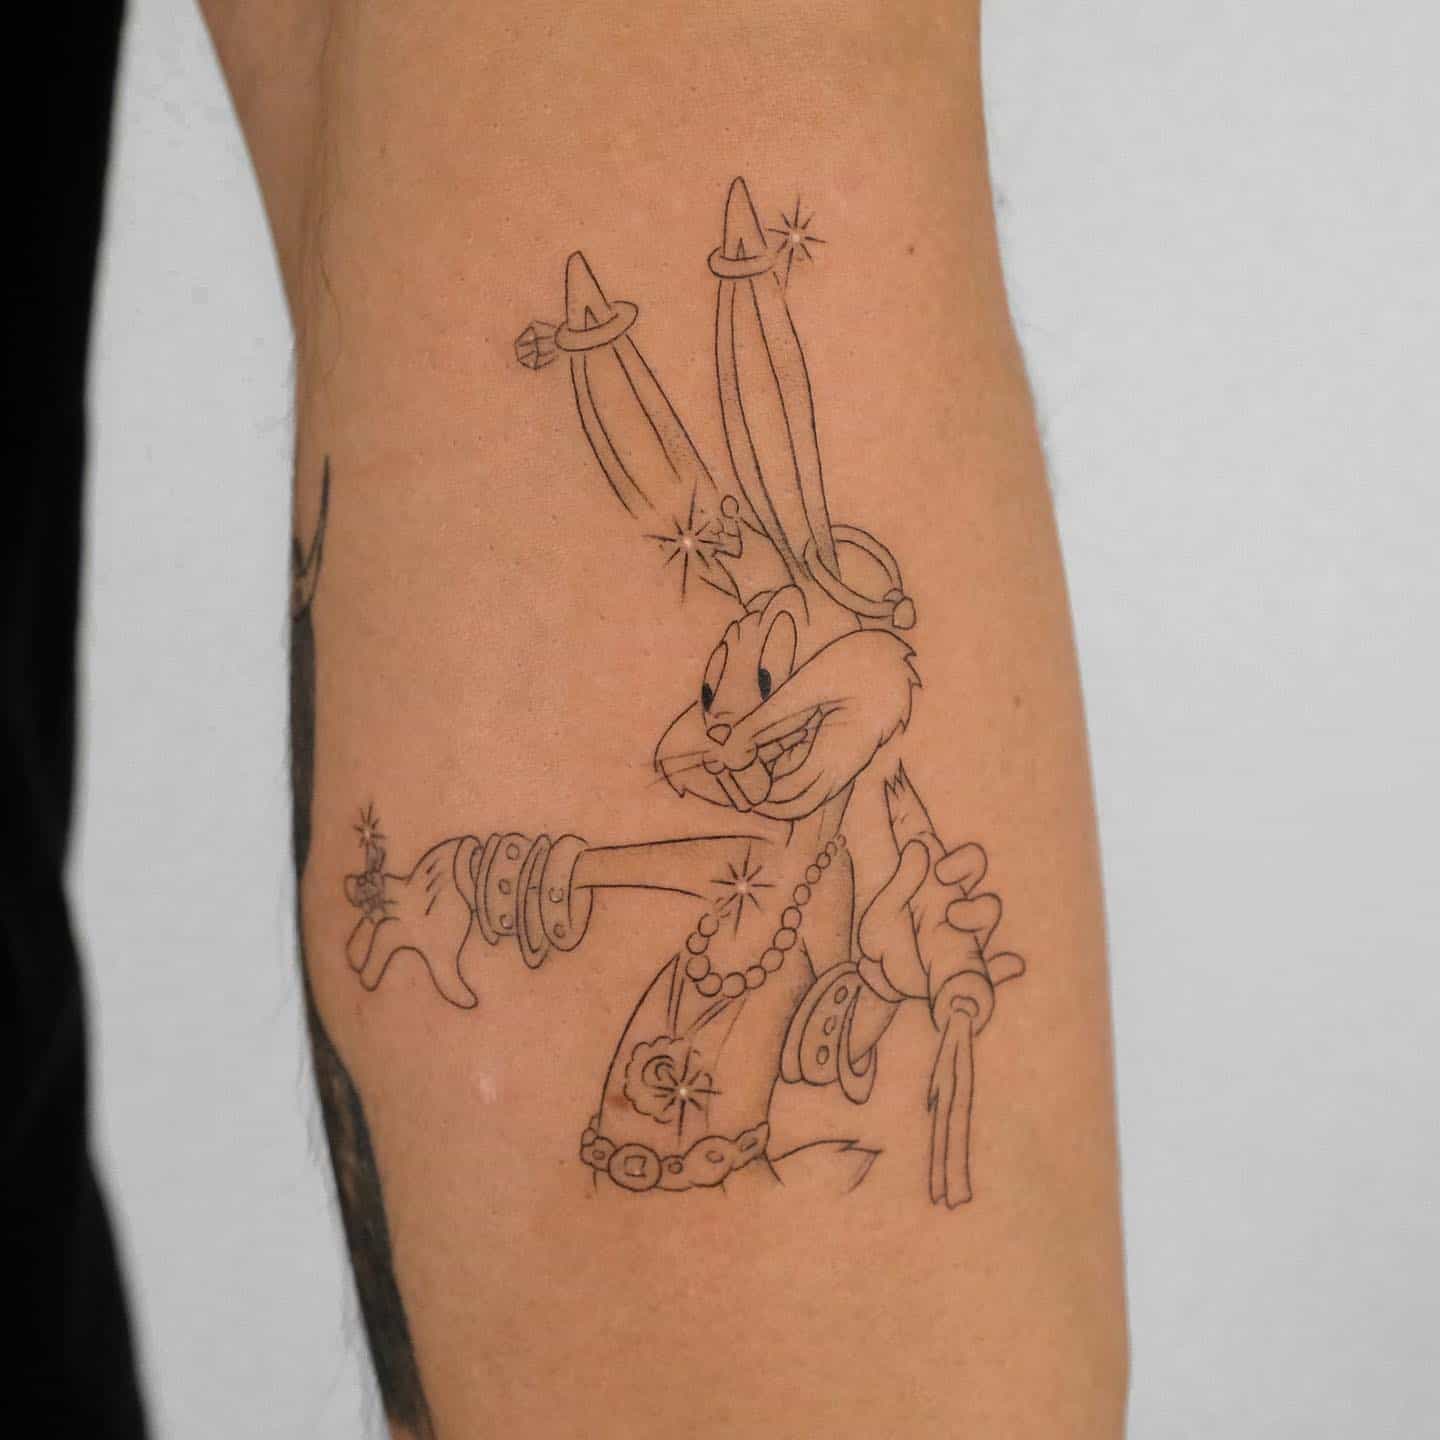 Bunny bugs tattoo by arielisgood